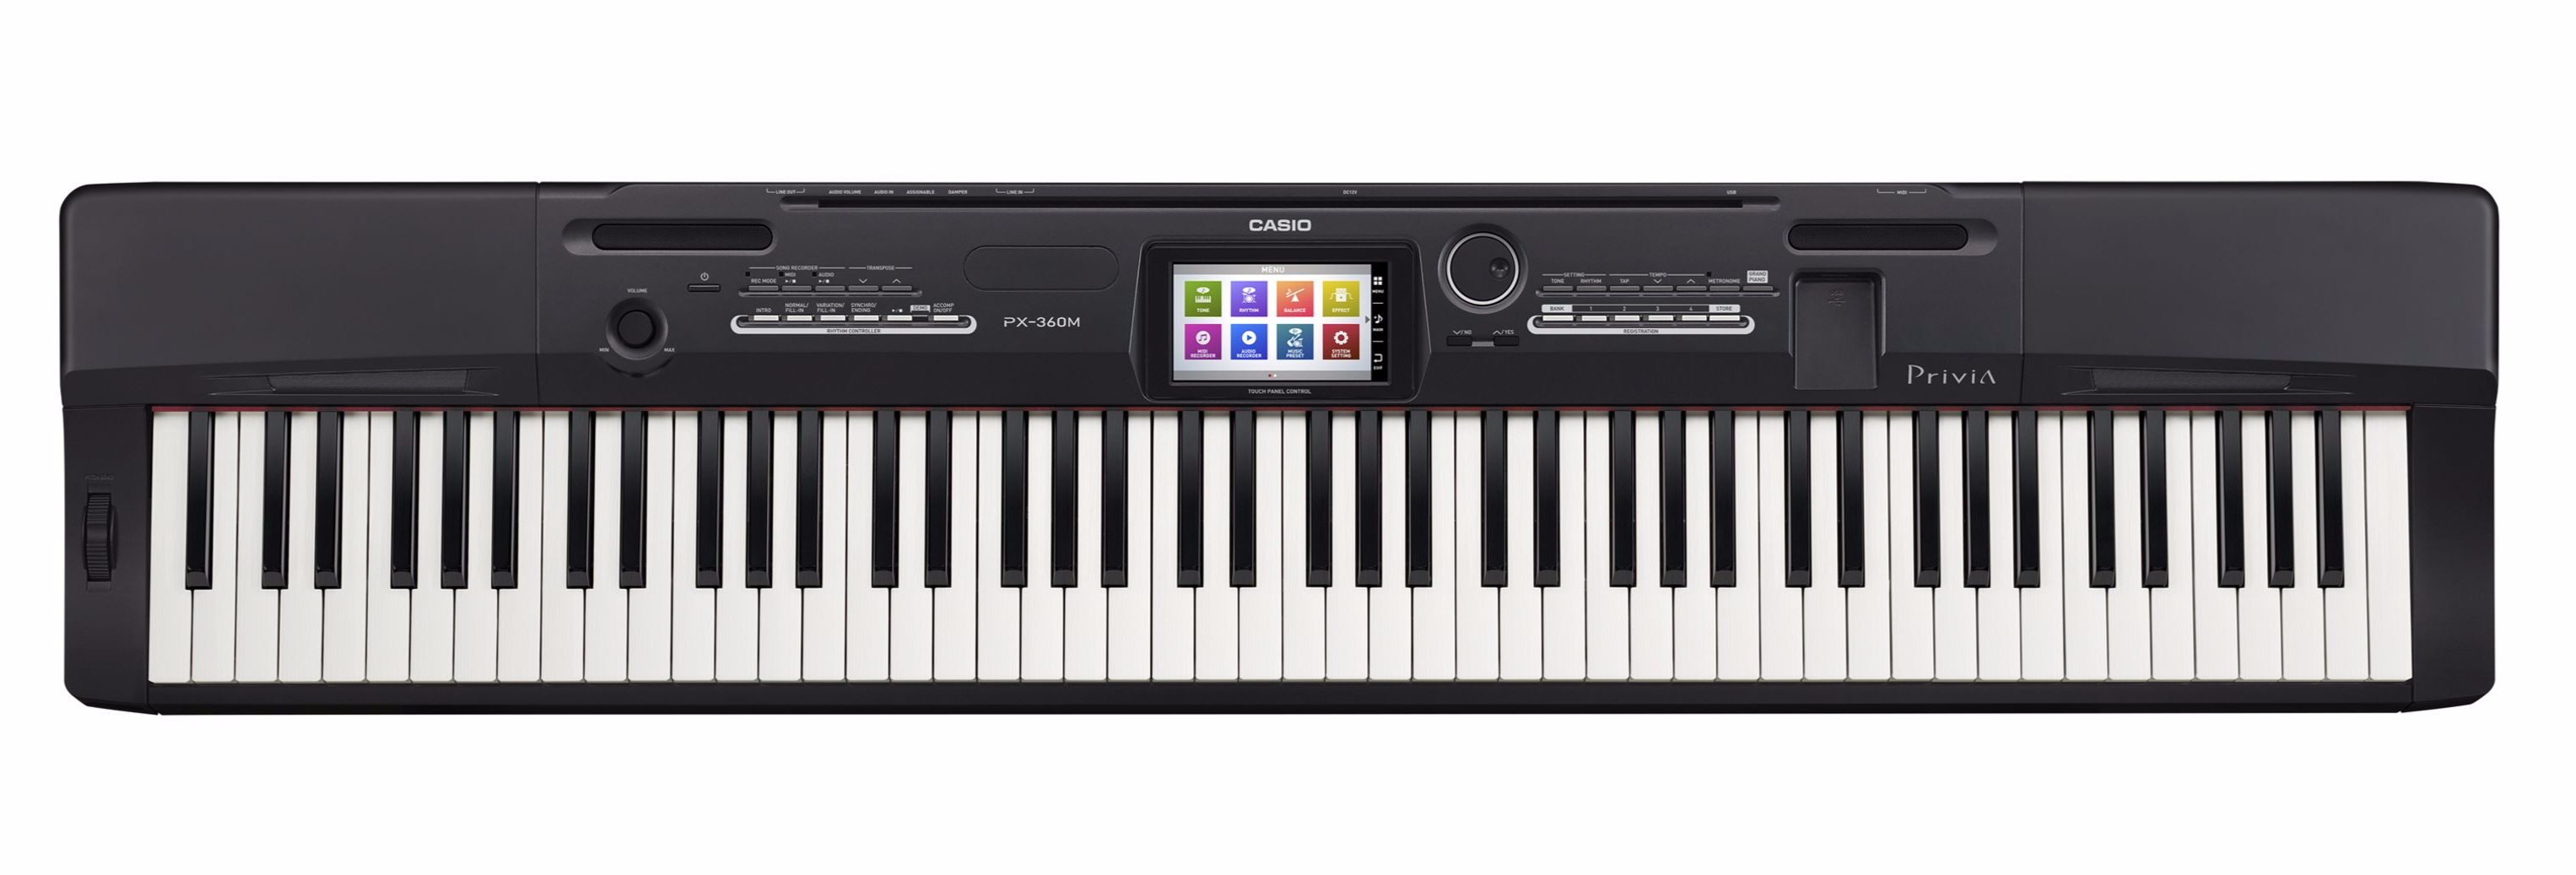 Casio Privia PX 360M Piano digital | MUSIC STORE professional